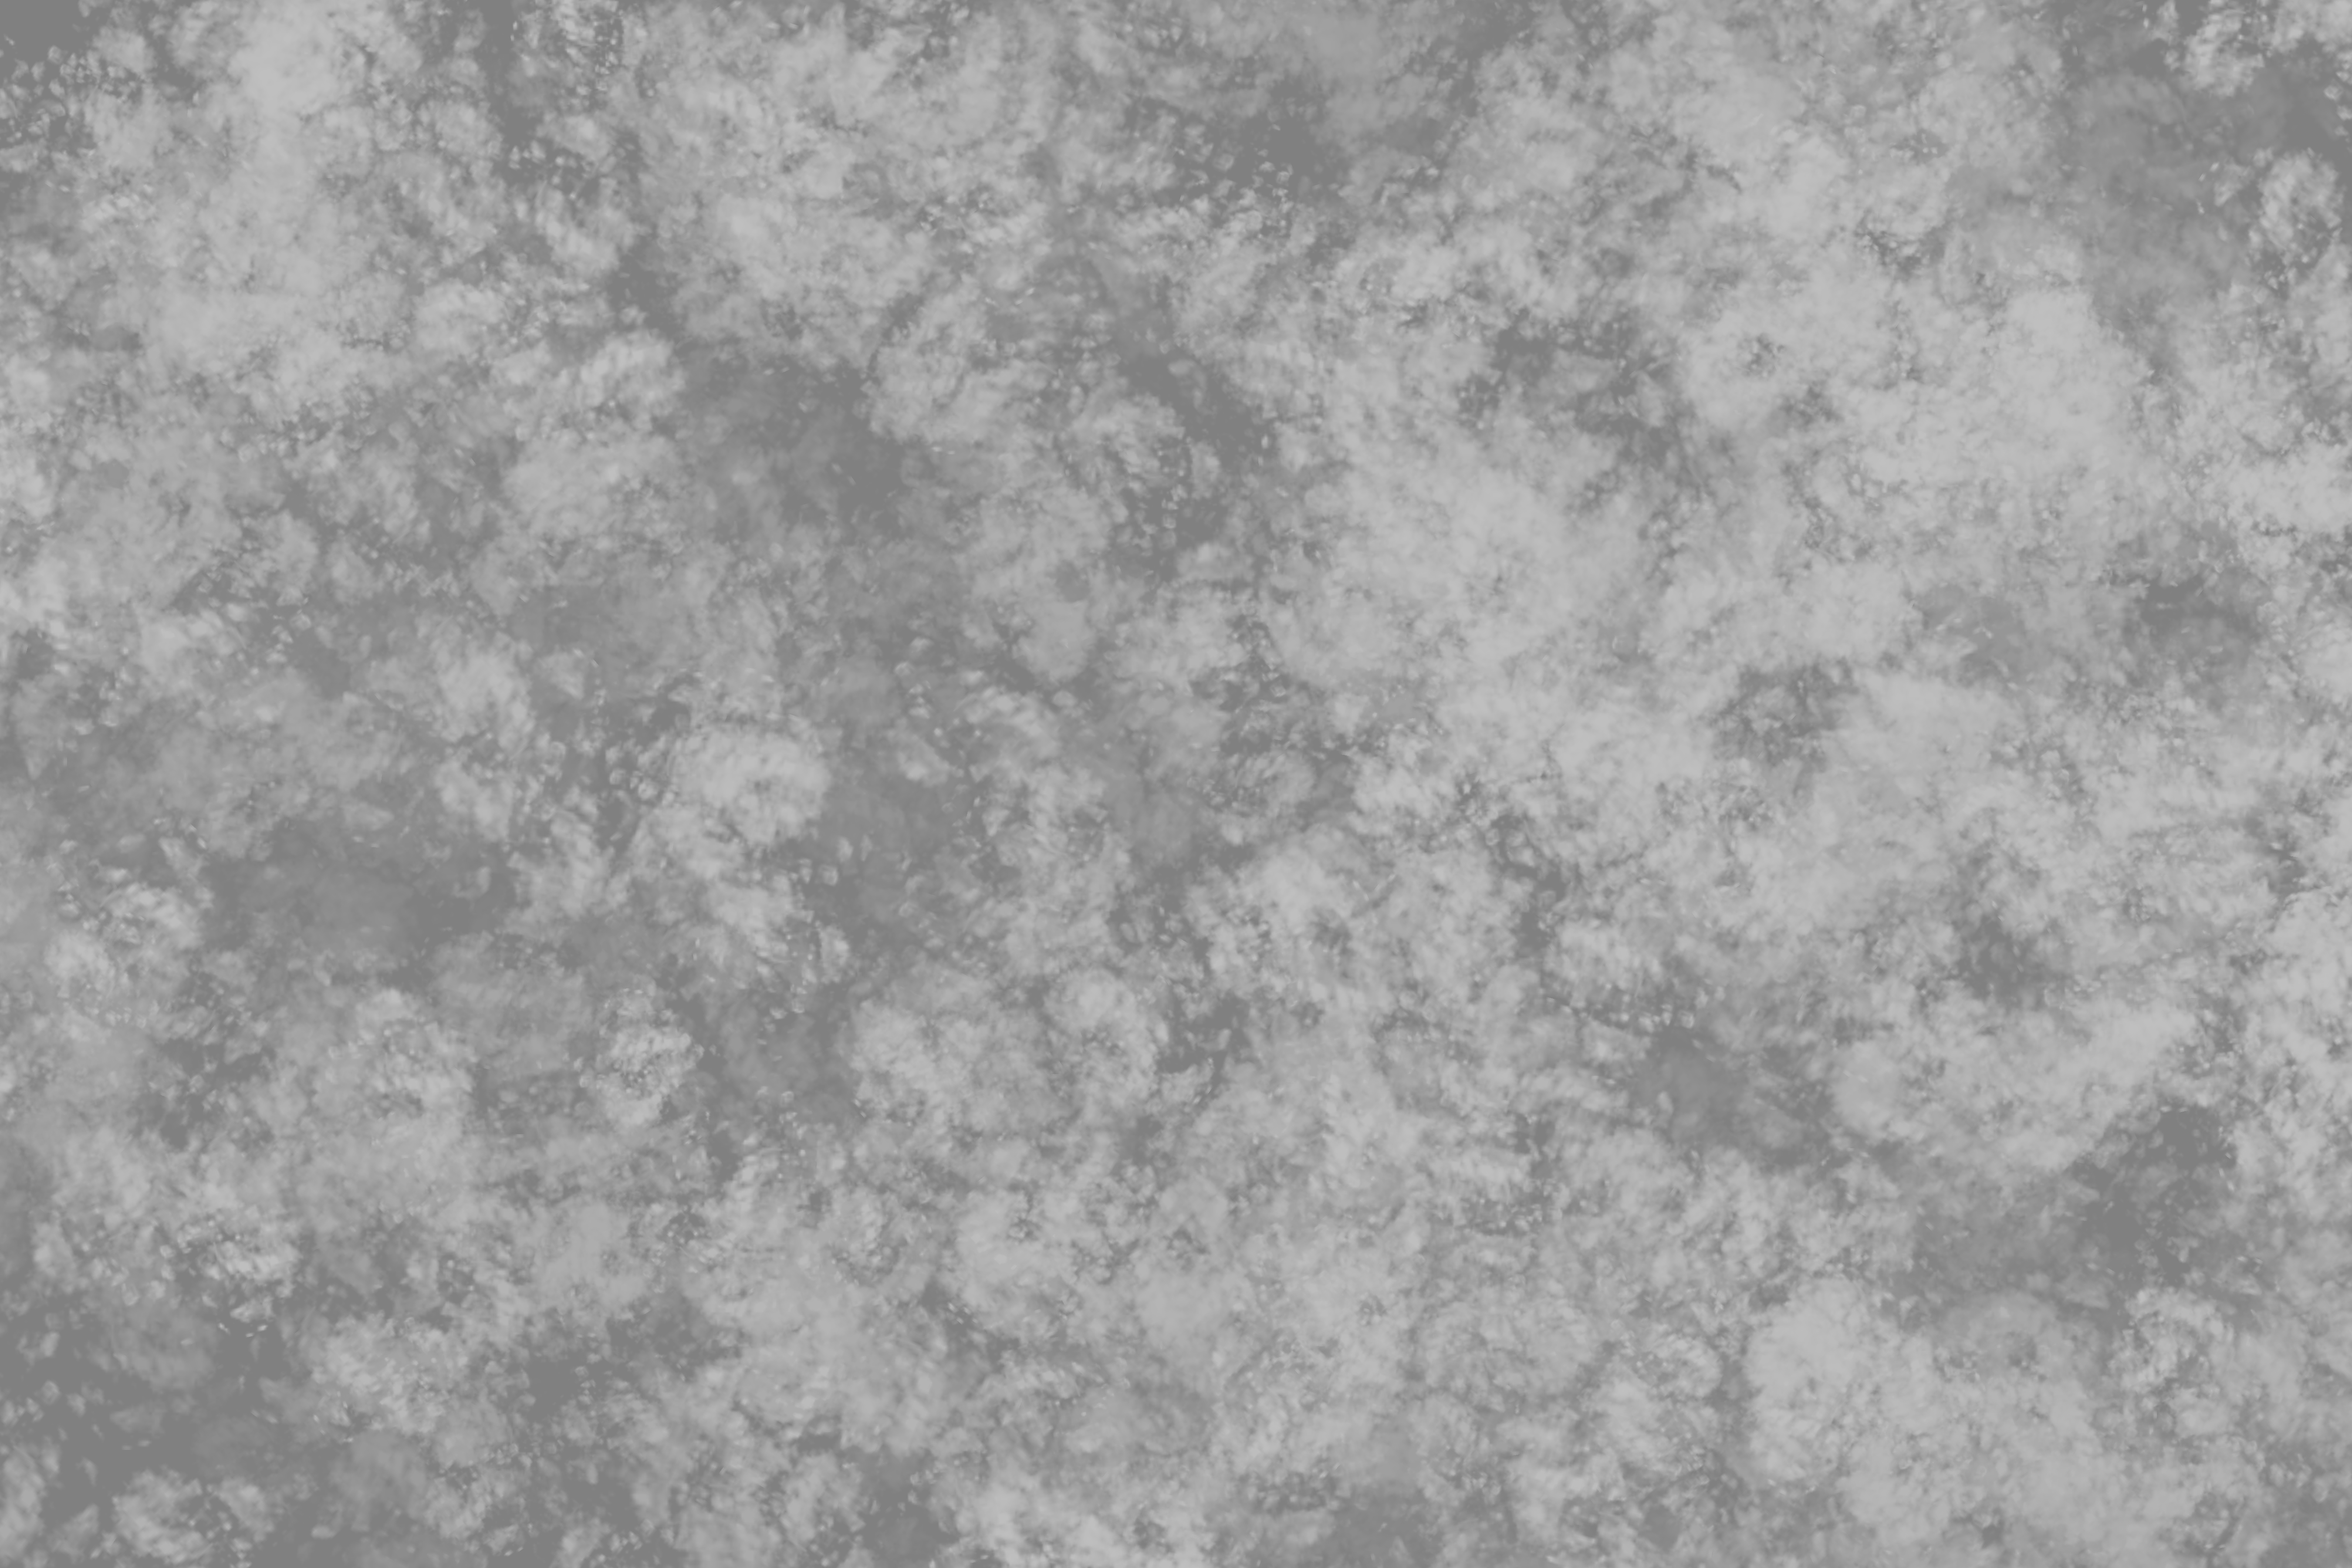 Gray Grunge Background Image Gallery